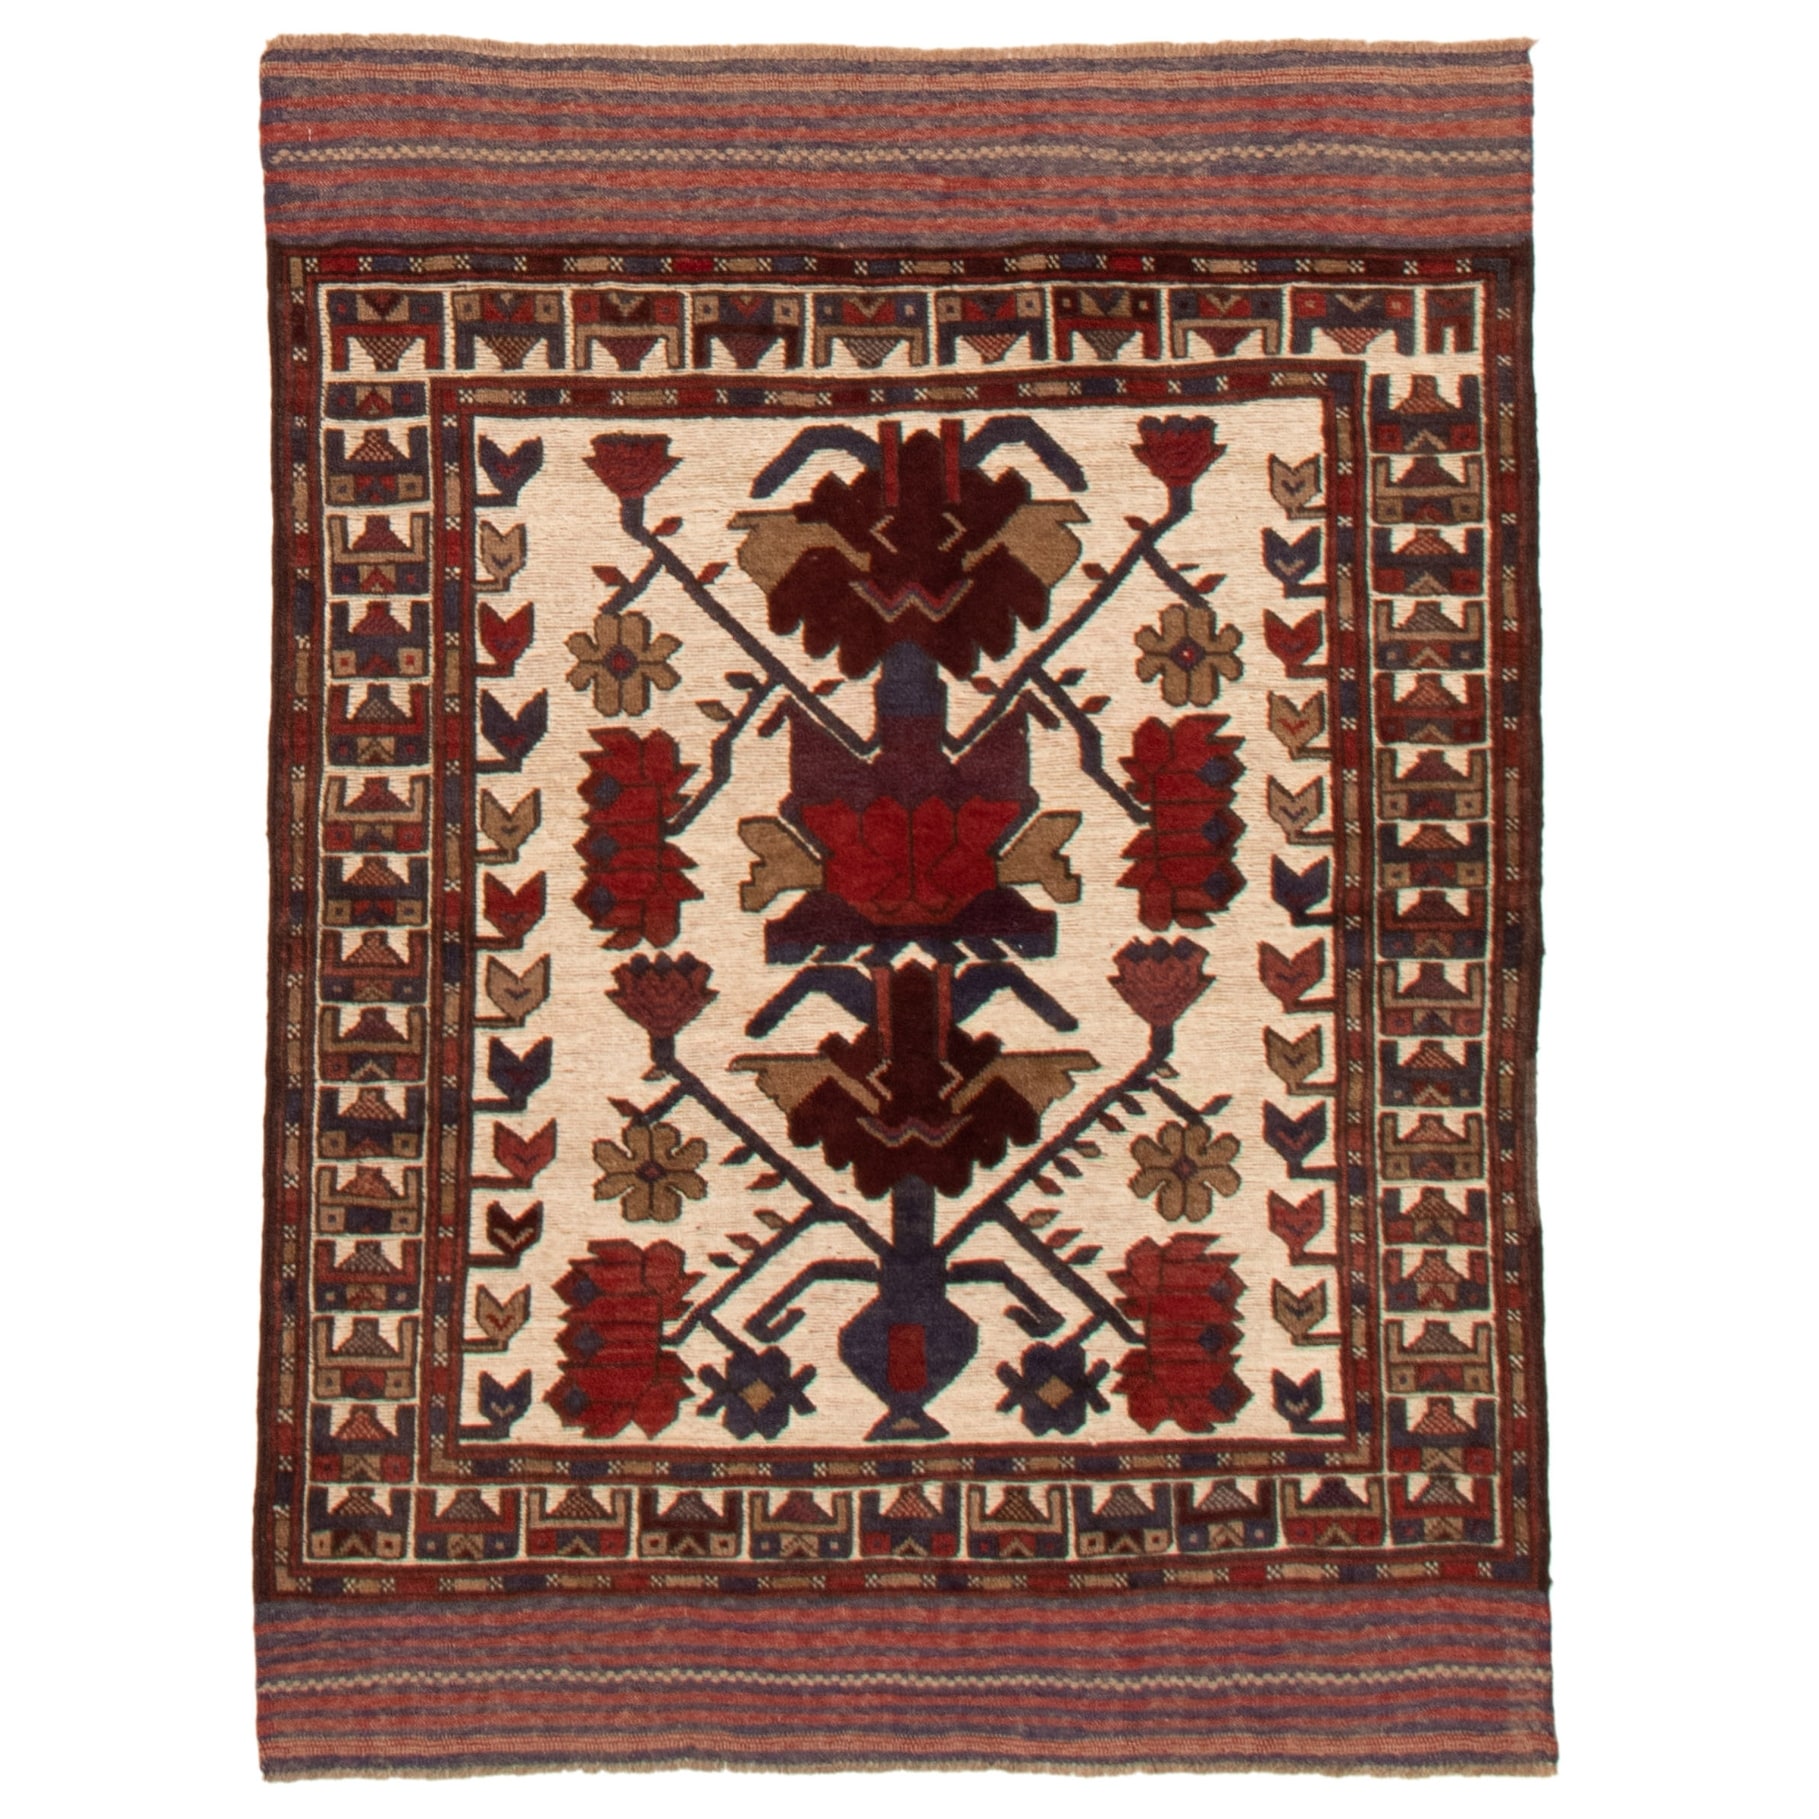 342708 Tajik Caucasian Bordered Ivory Rug 4'0 x 6'0 Hand-Knotted Wool Rug eCarpet Gallery Area Rug for Living Room Bedroom 